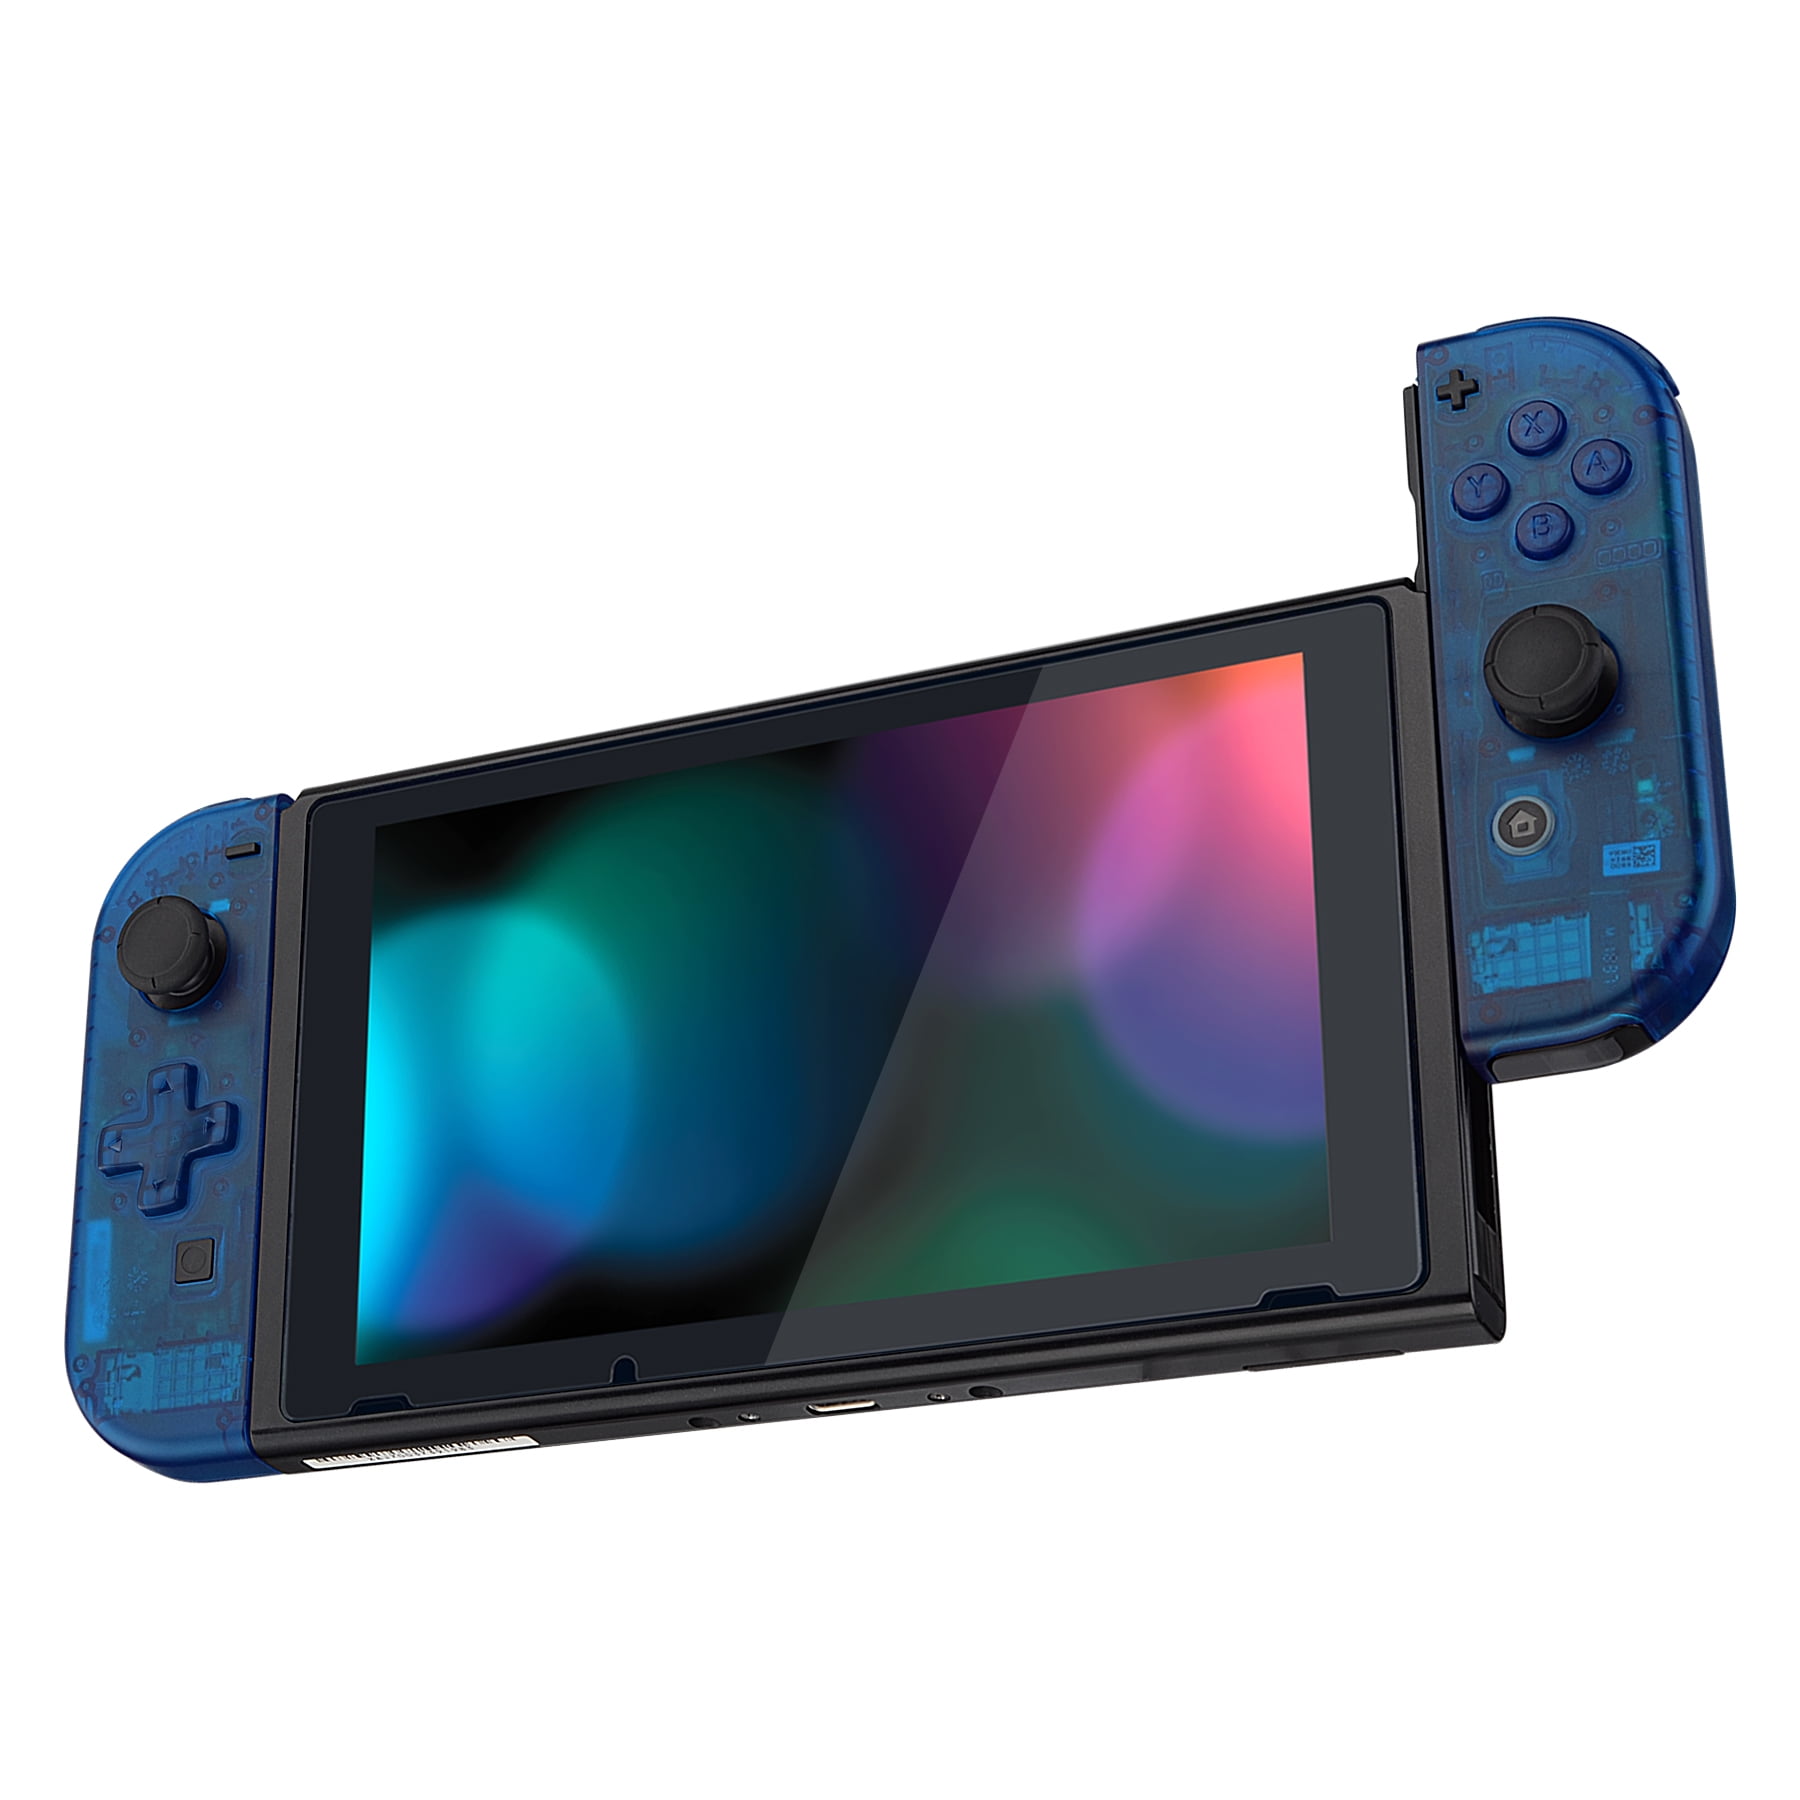 Nintendo switch - Atomic purple edition - : r/NintendoSwitch